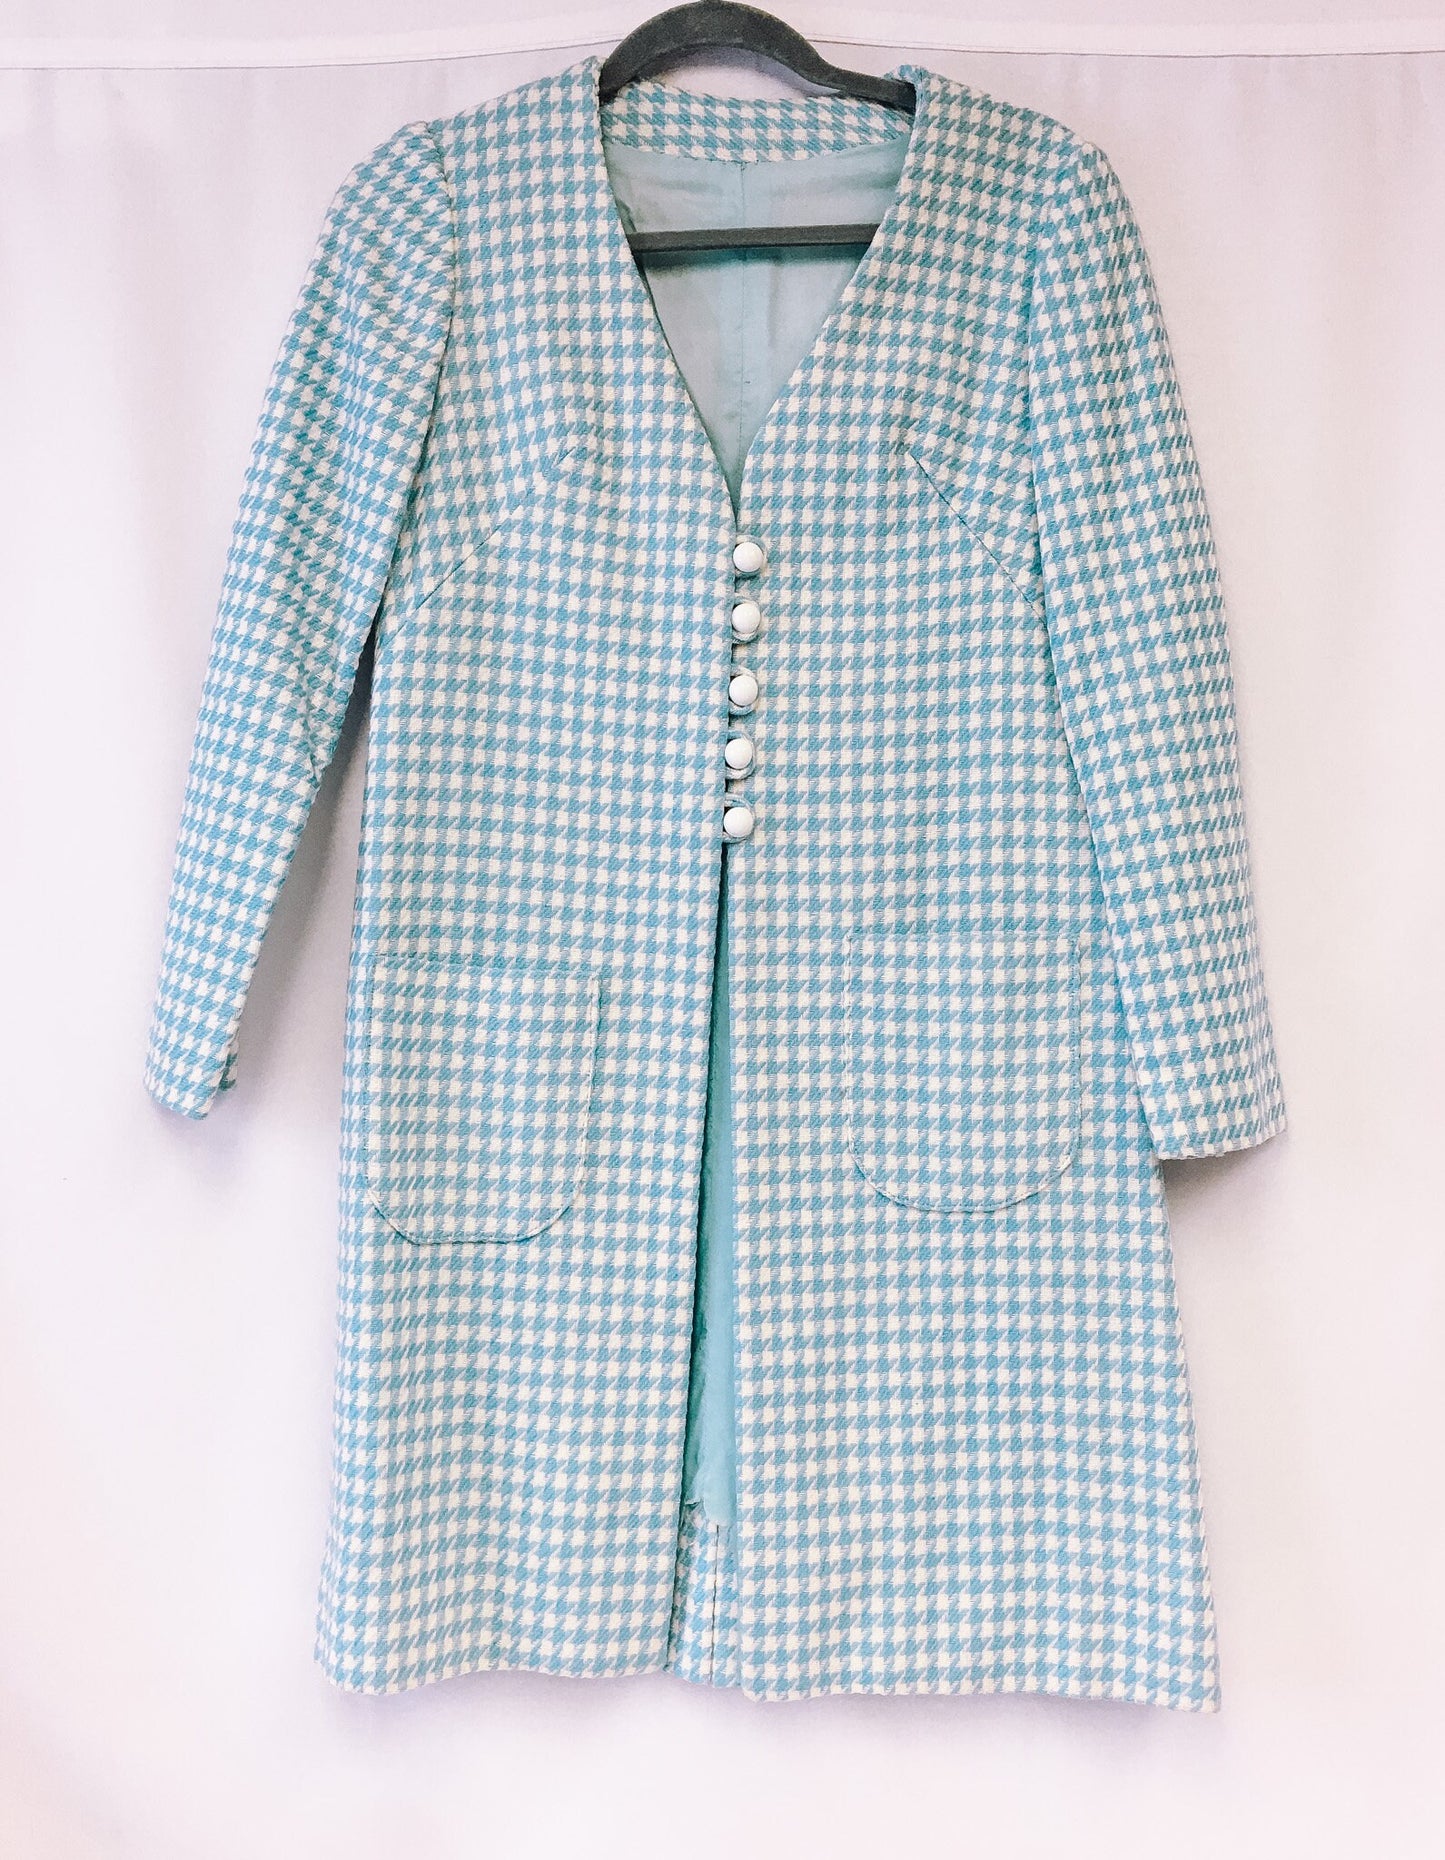 Handmade Vintage 60s/70s Baby Blue Houndstooth Patterned Long Coat, Vintage 60s/70s Overcoat Jacket